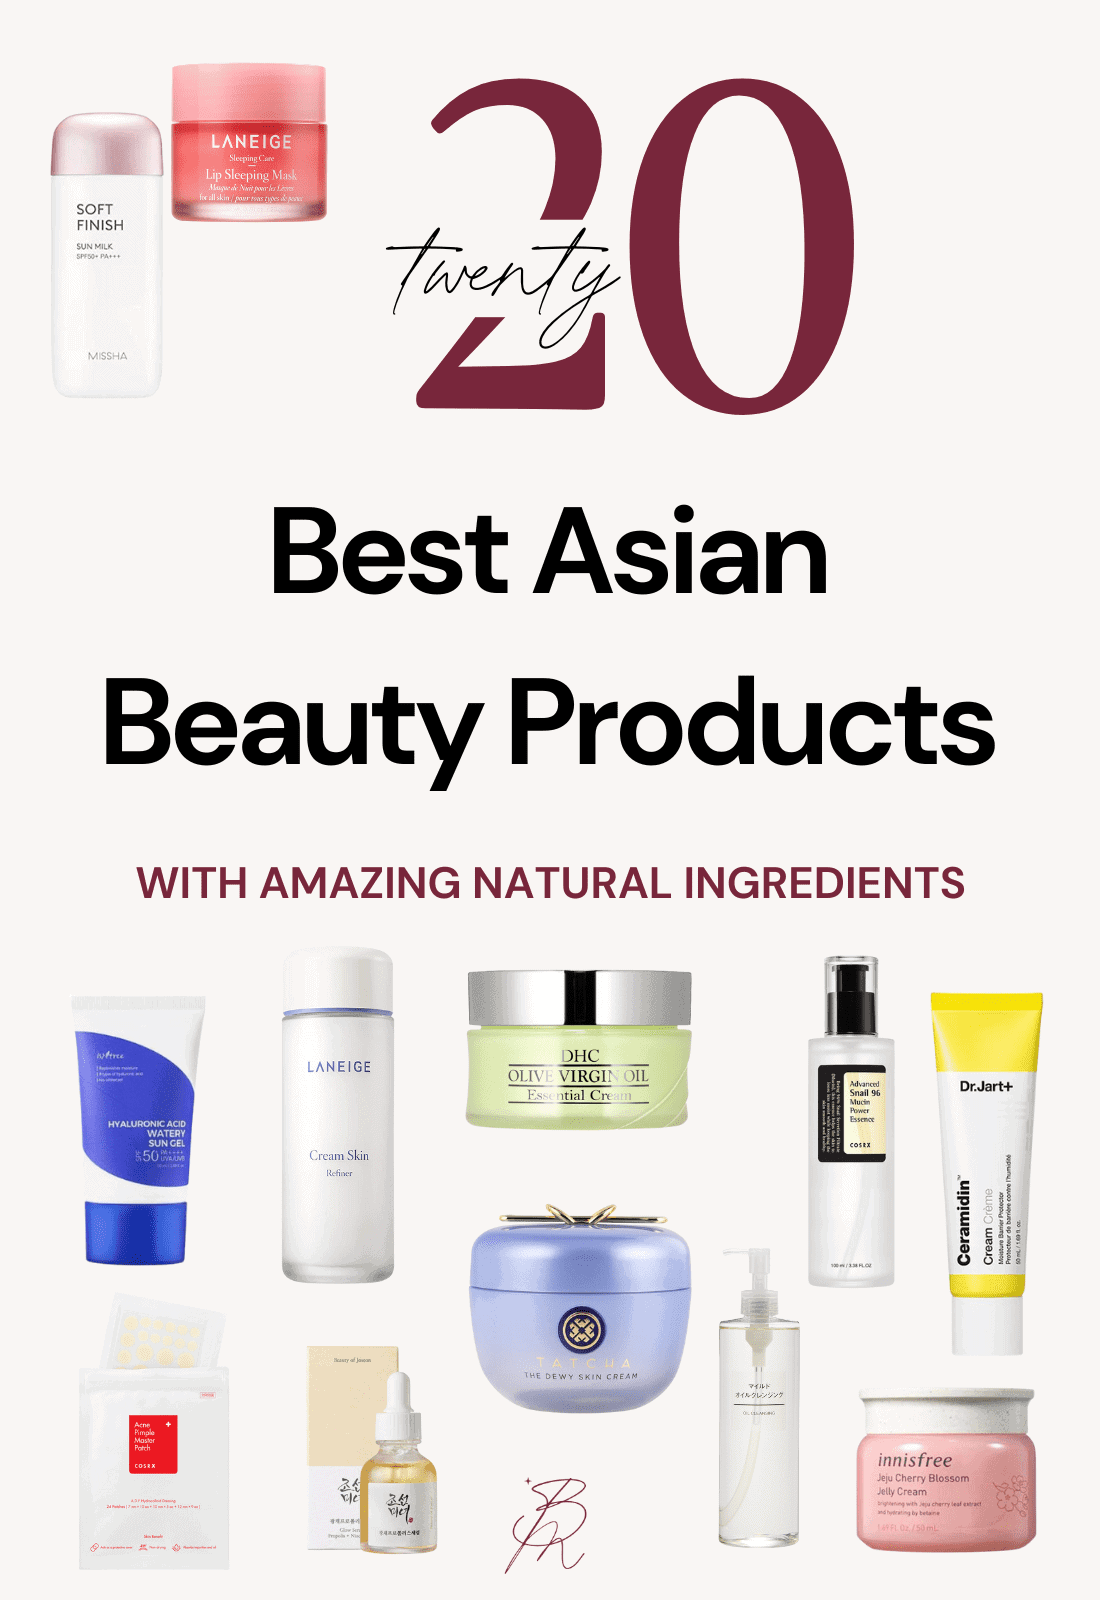 whitening china beauty products